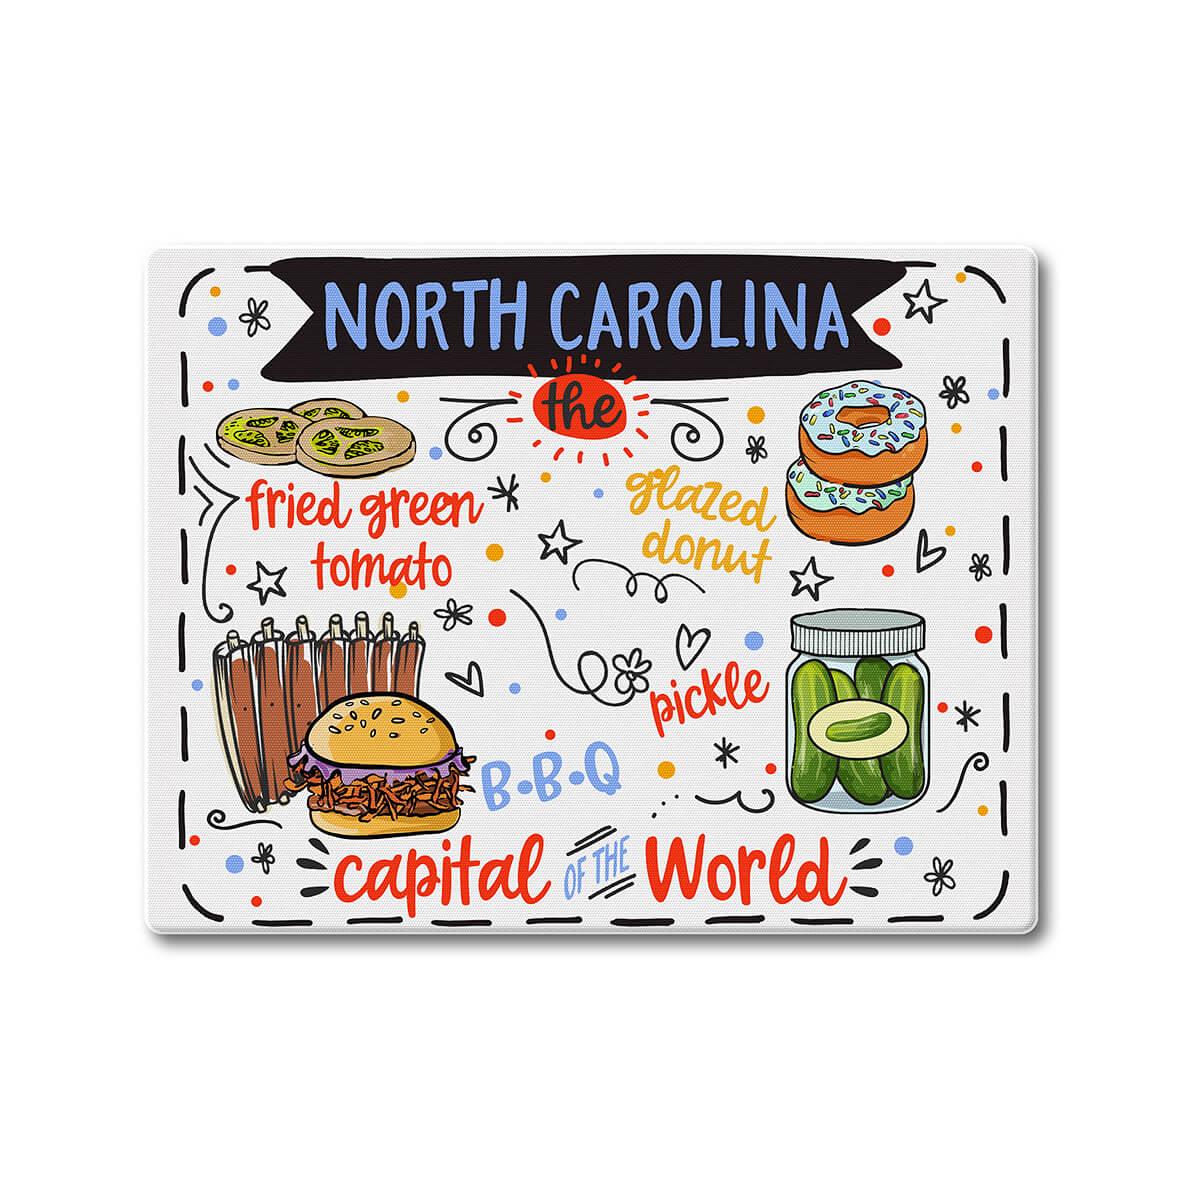  Small Glass Counter Saver - North Carolina Foods